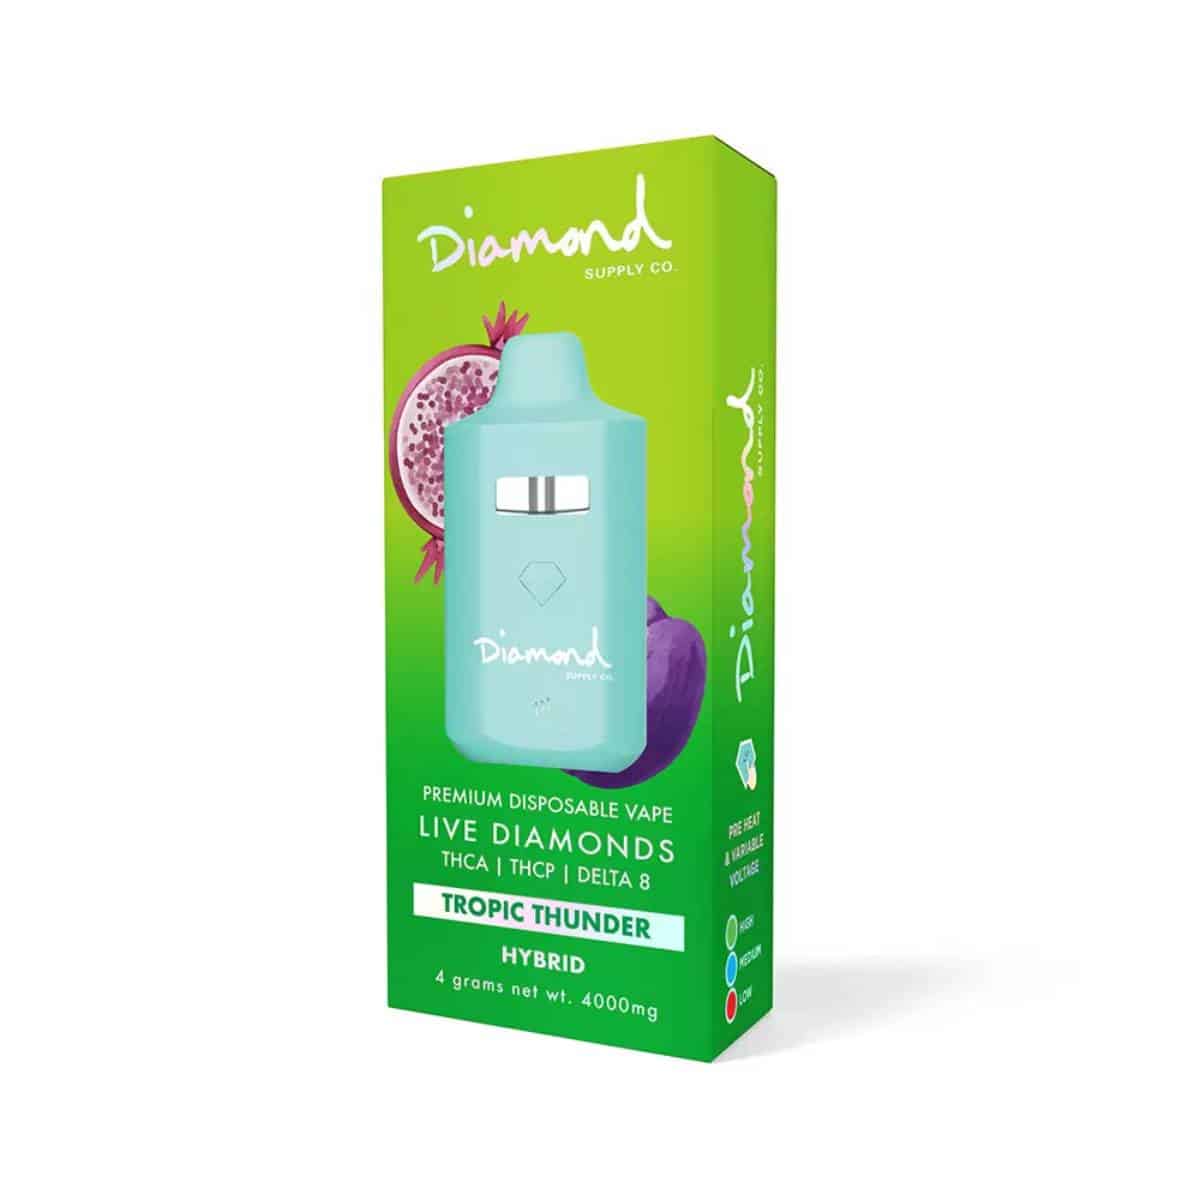 Urb x Diamond Supply Co. Live Diamonds Disposable | 4g Best Price